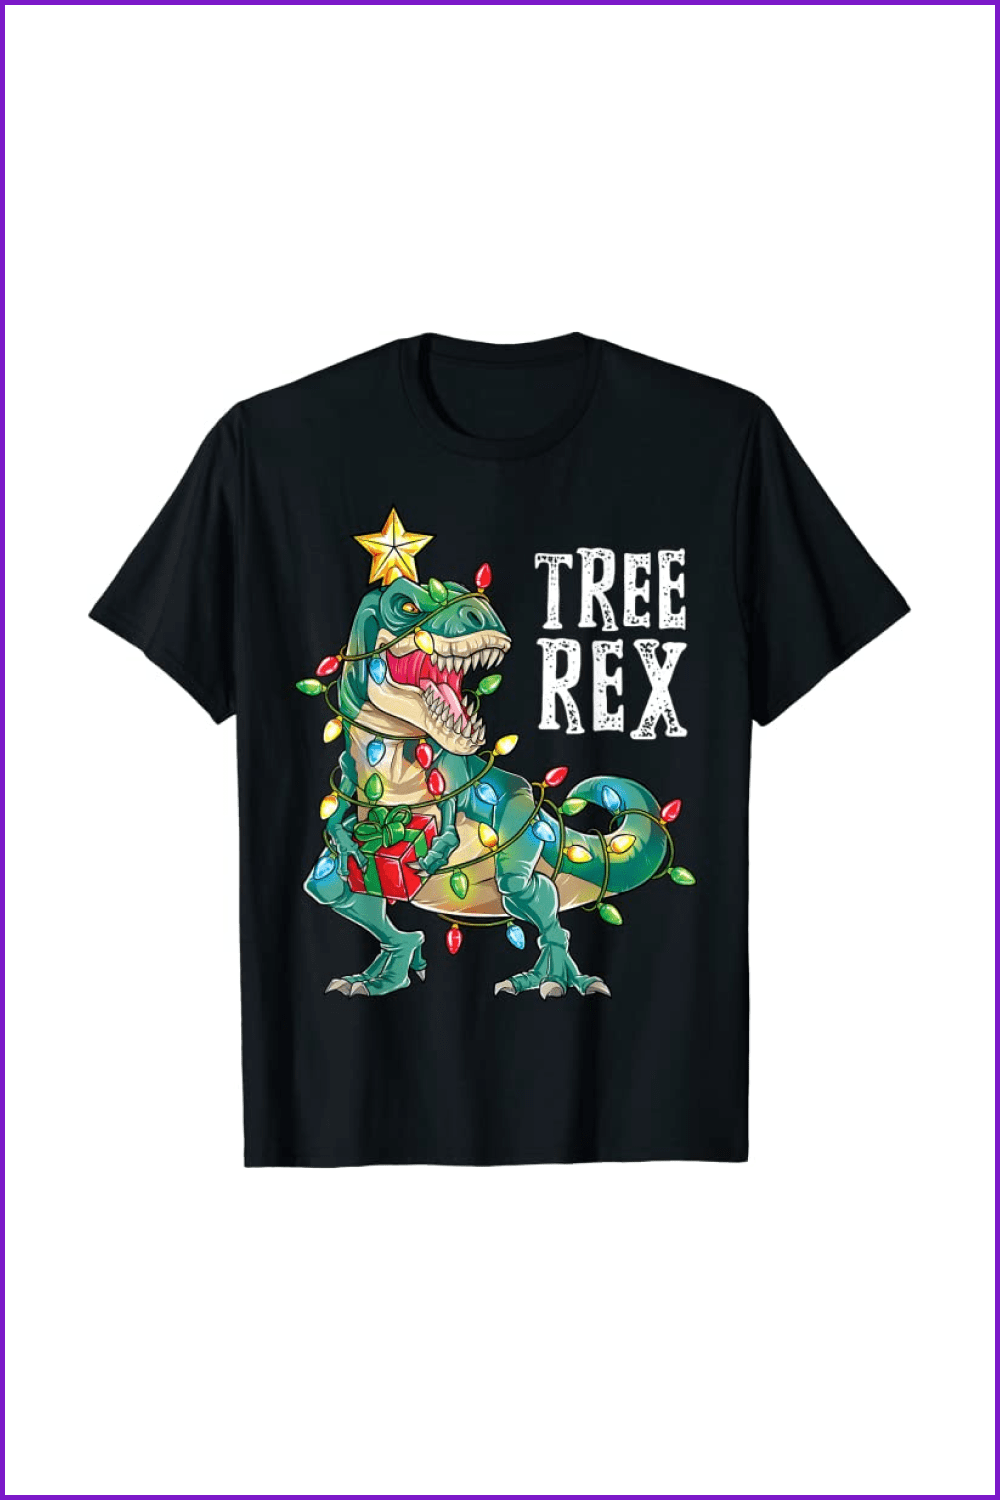 Black t-shirt with a Dinosaur Trex like a Christmas tree with lights.